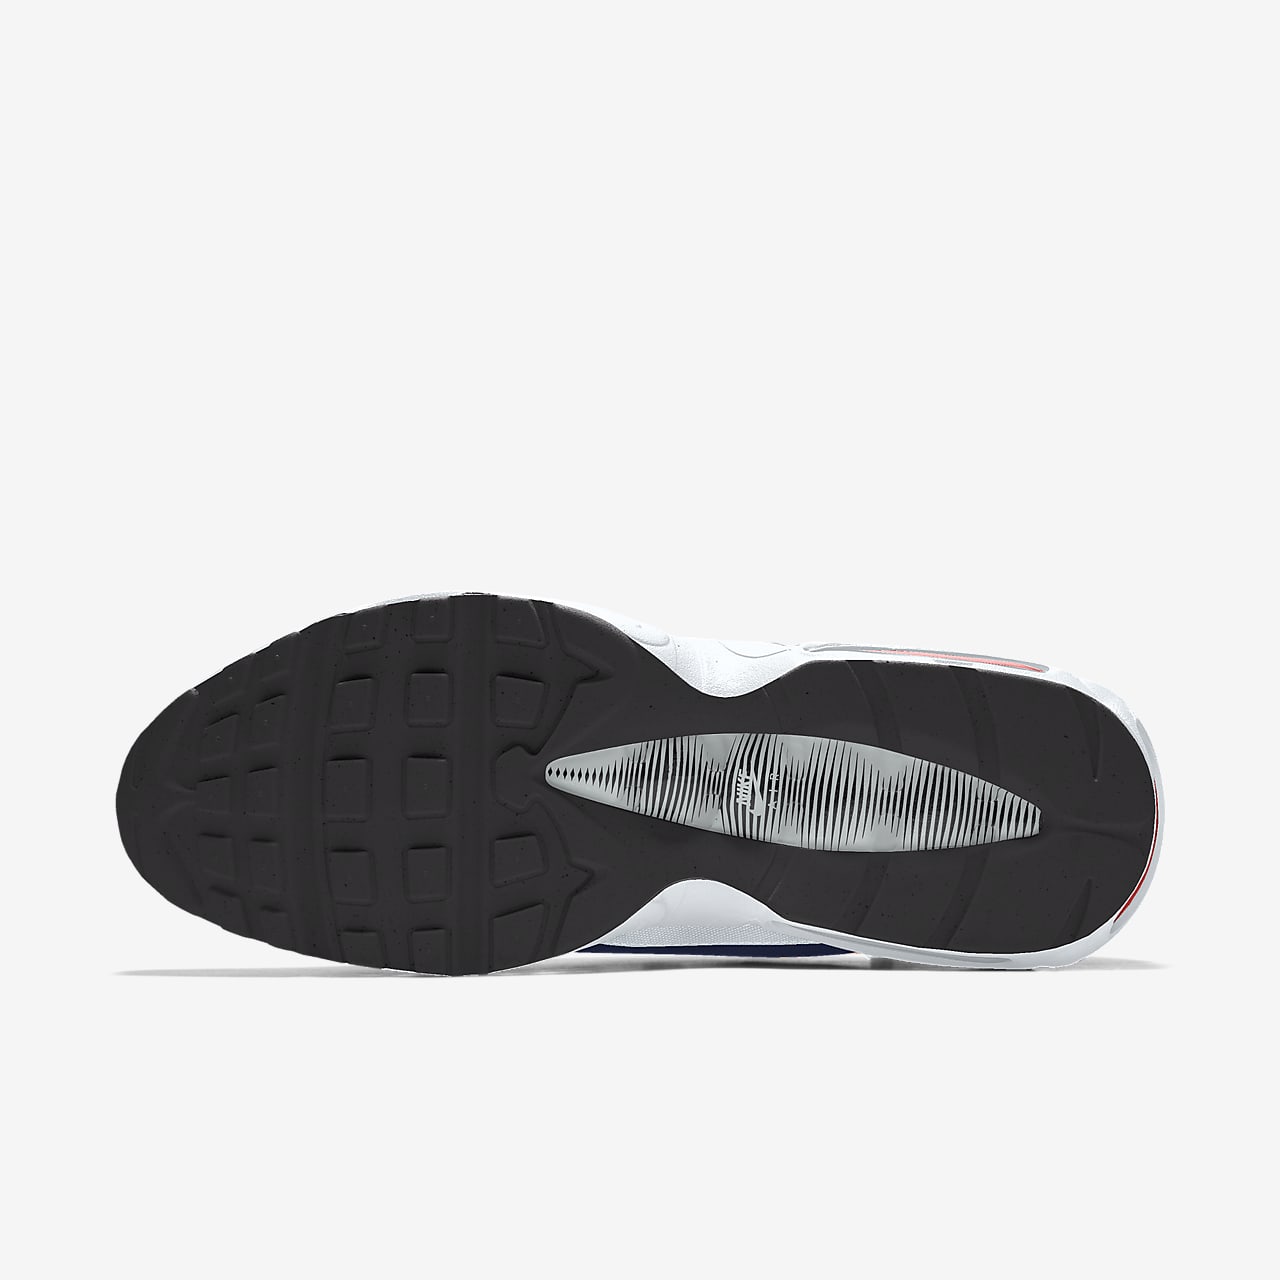 Nike Air Max 90 Unlocked By You Custom Men's Lifestyle Shoe